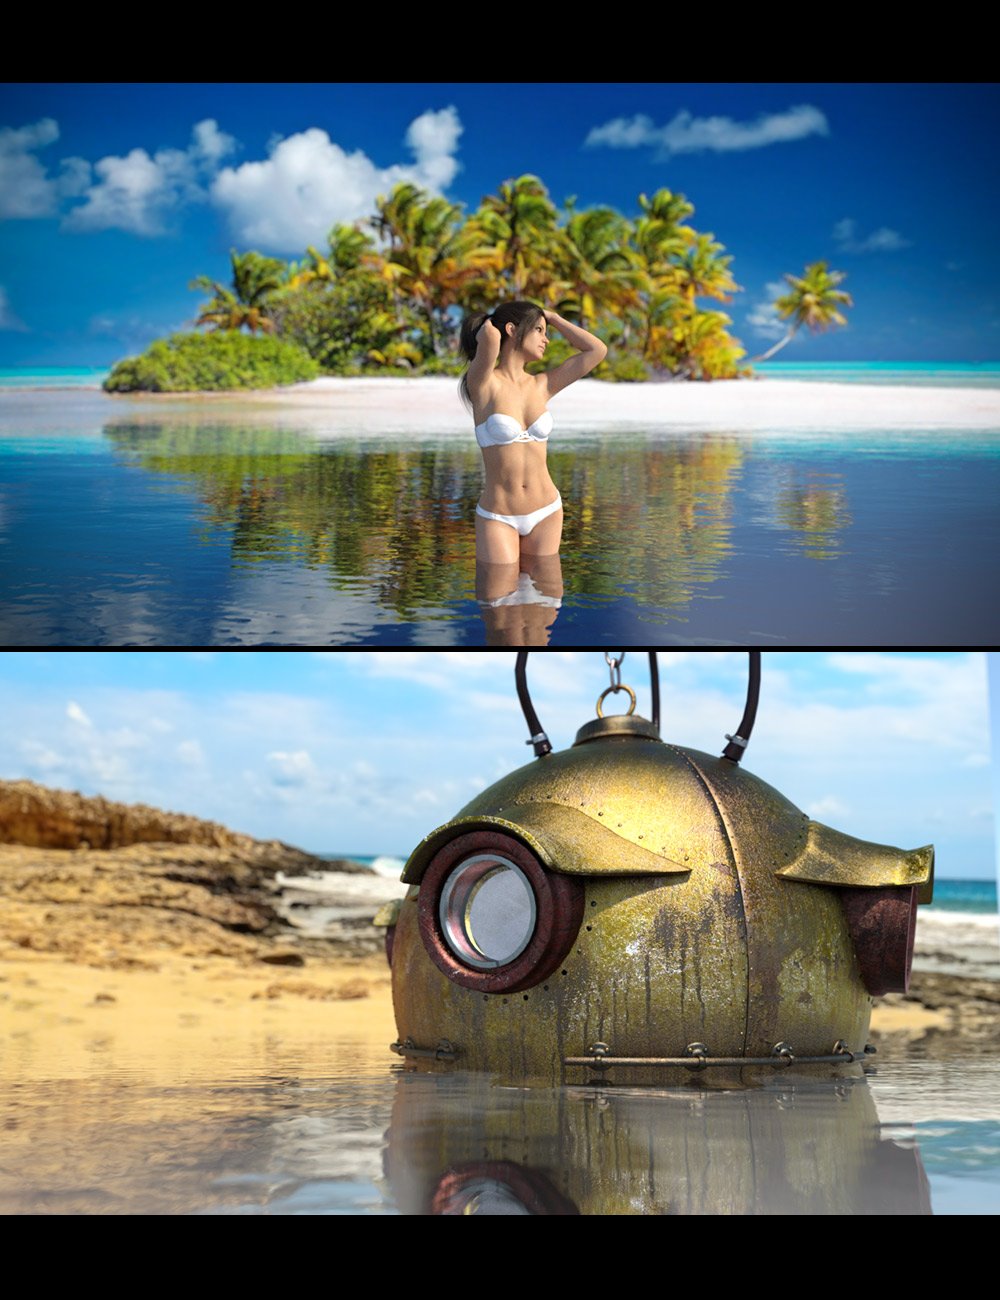 Take A Swim by: Dreamlight, 3D Models by Daz 3D